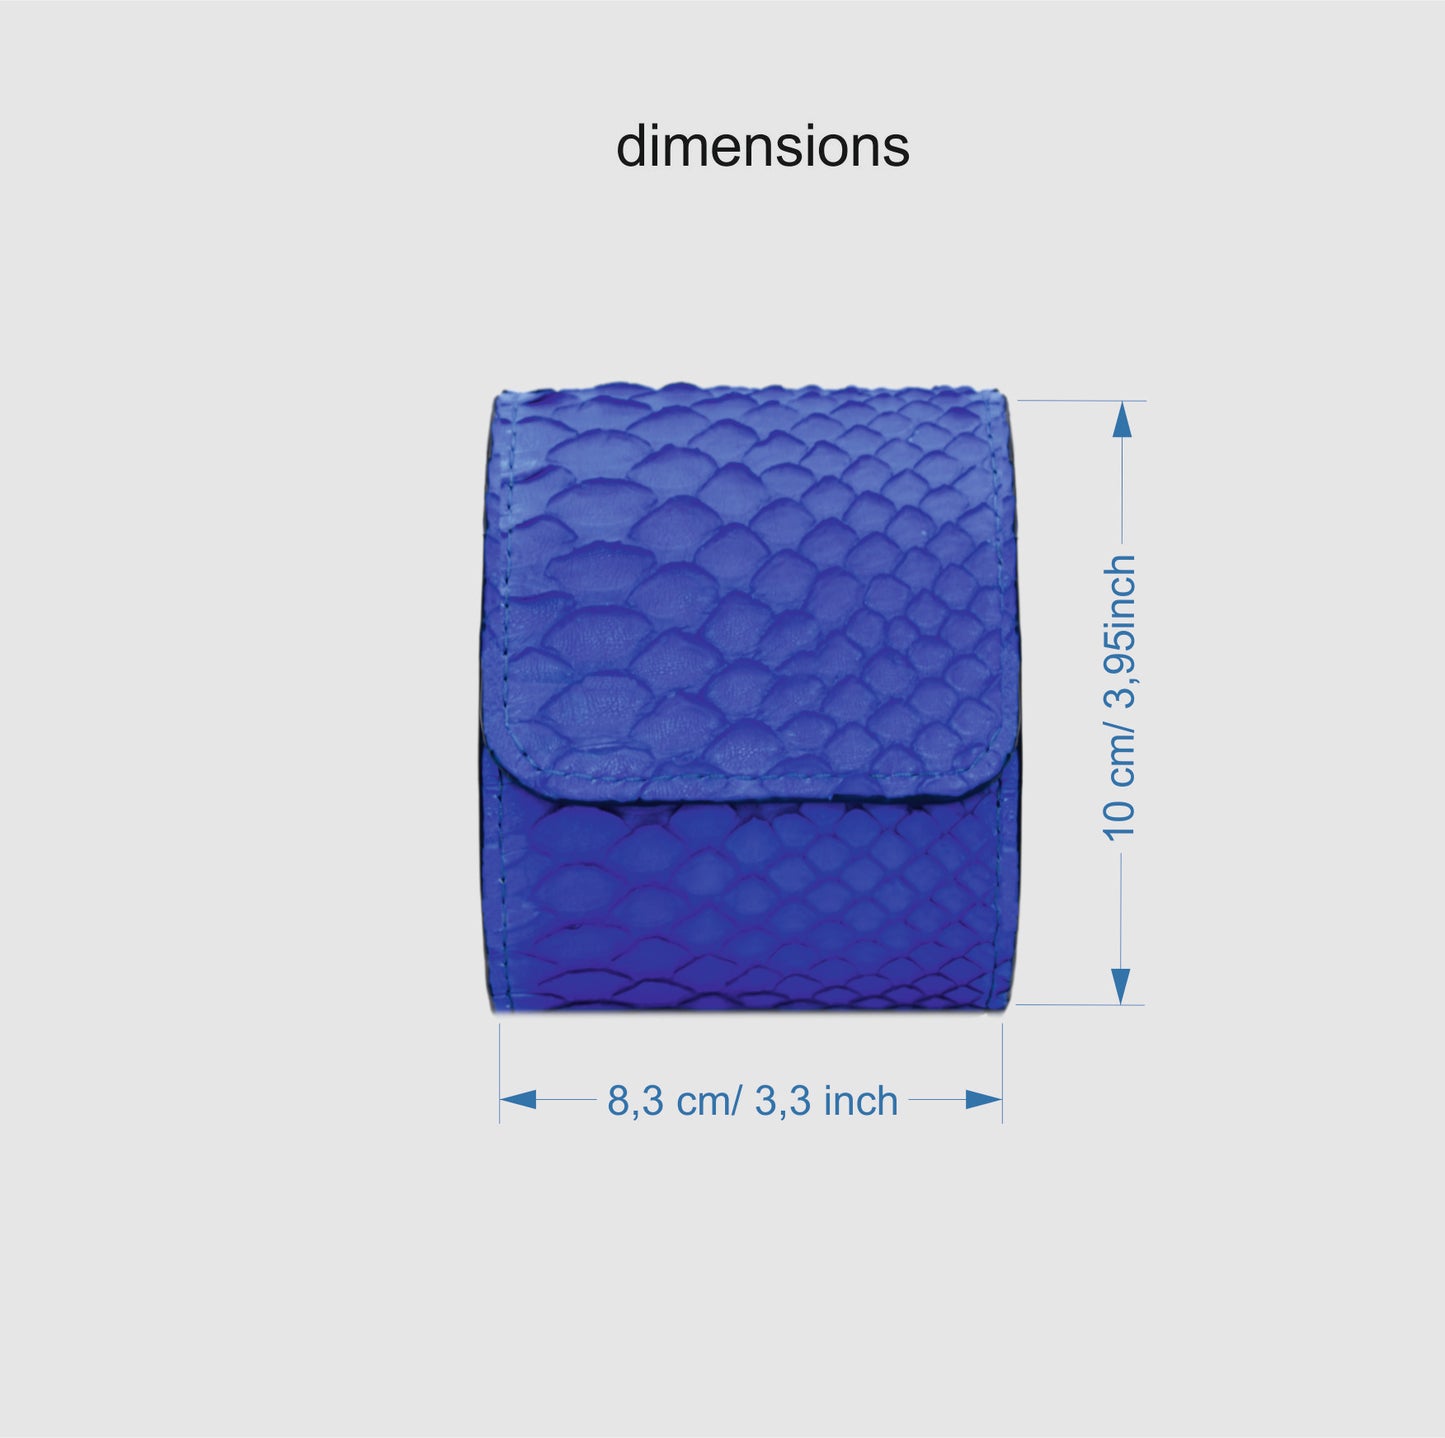 Watch Roll in genuine Python skin personalized - Cobalt Blue